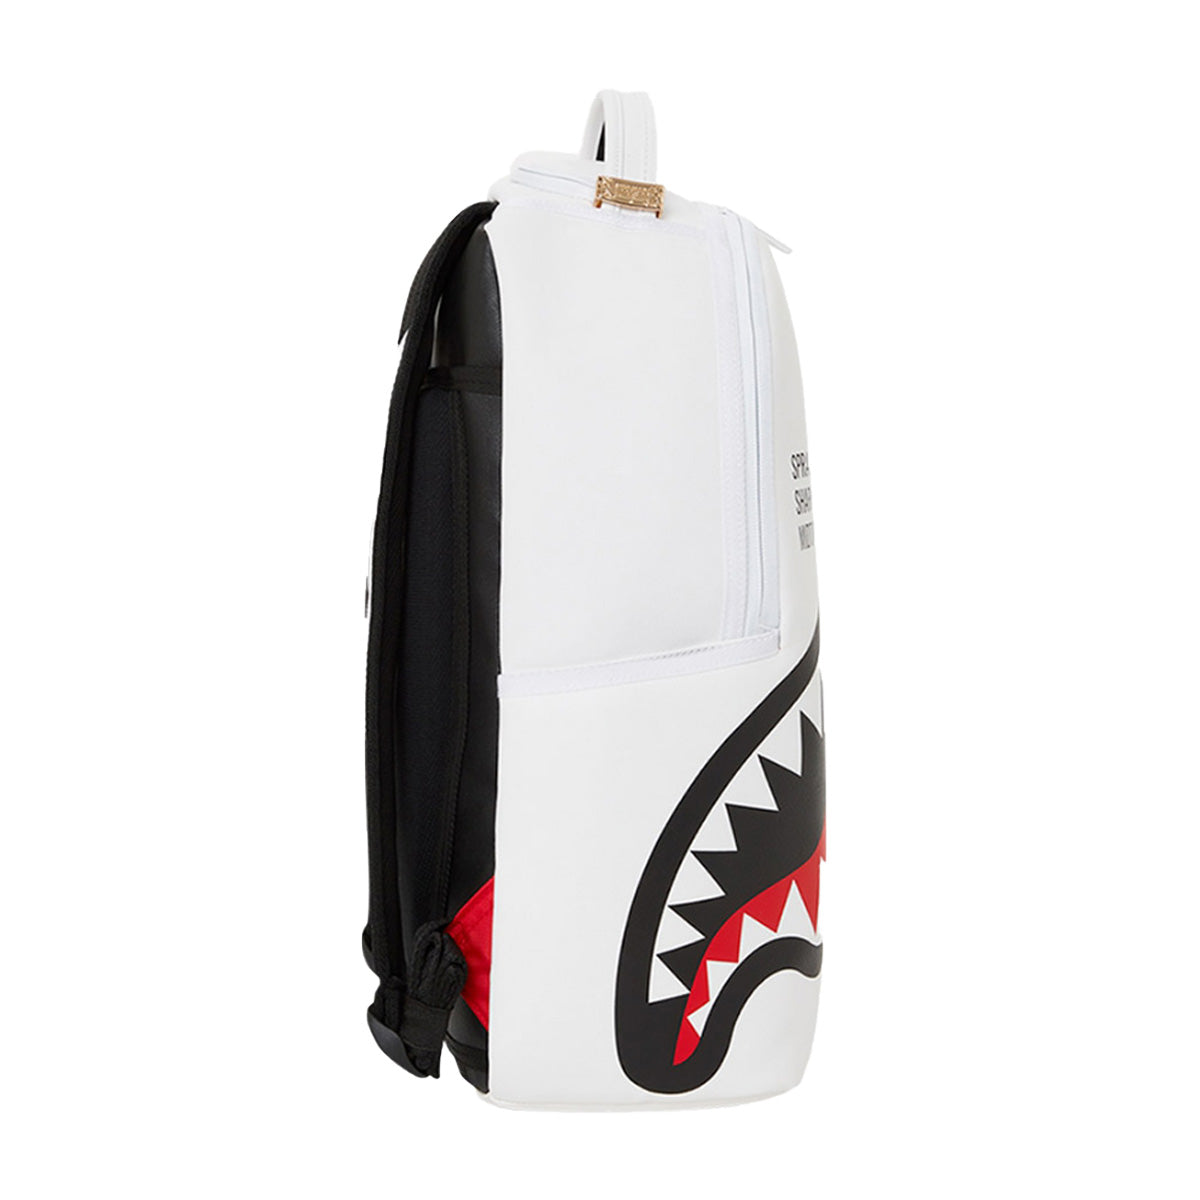 sprayground backpack white